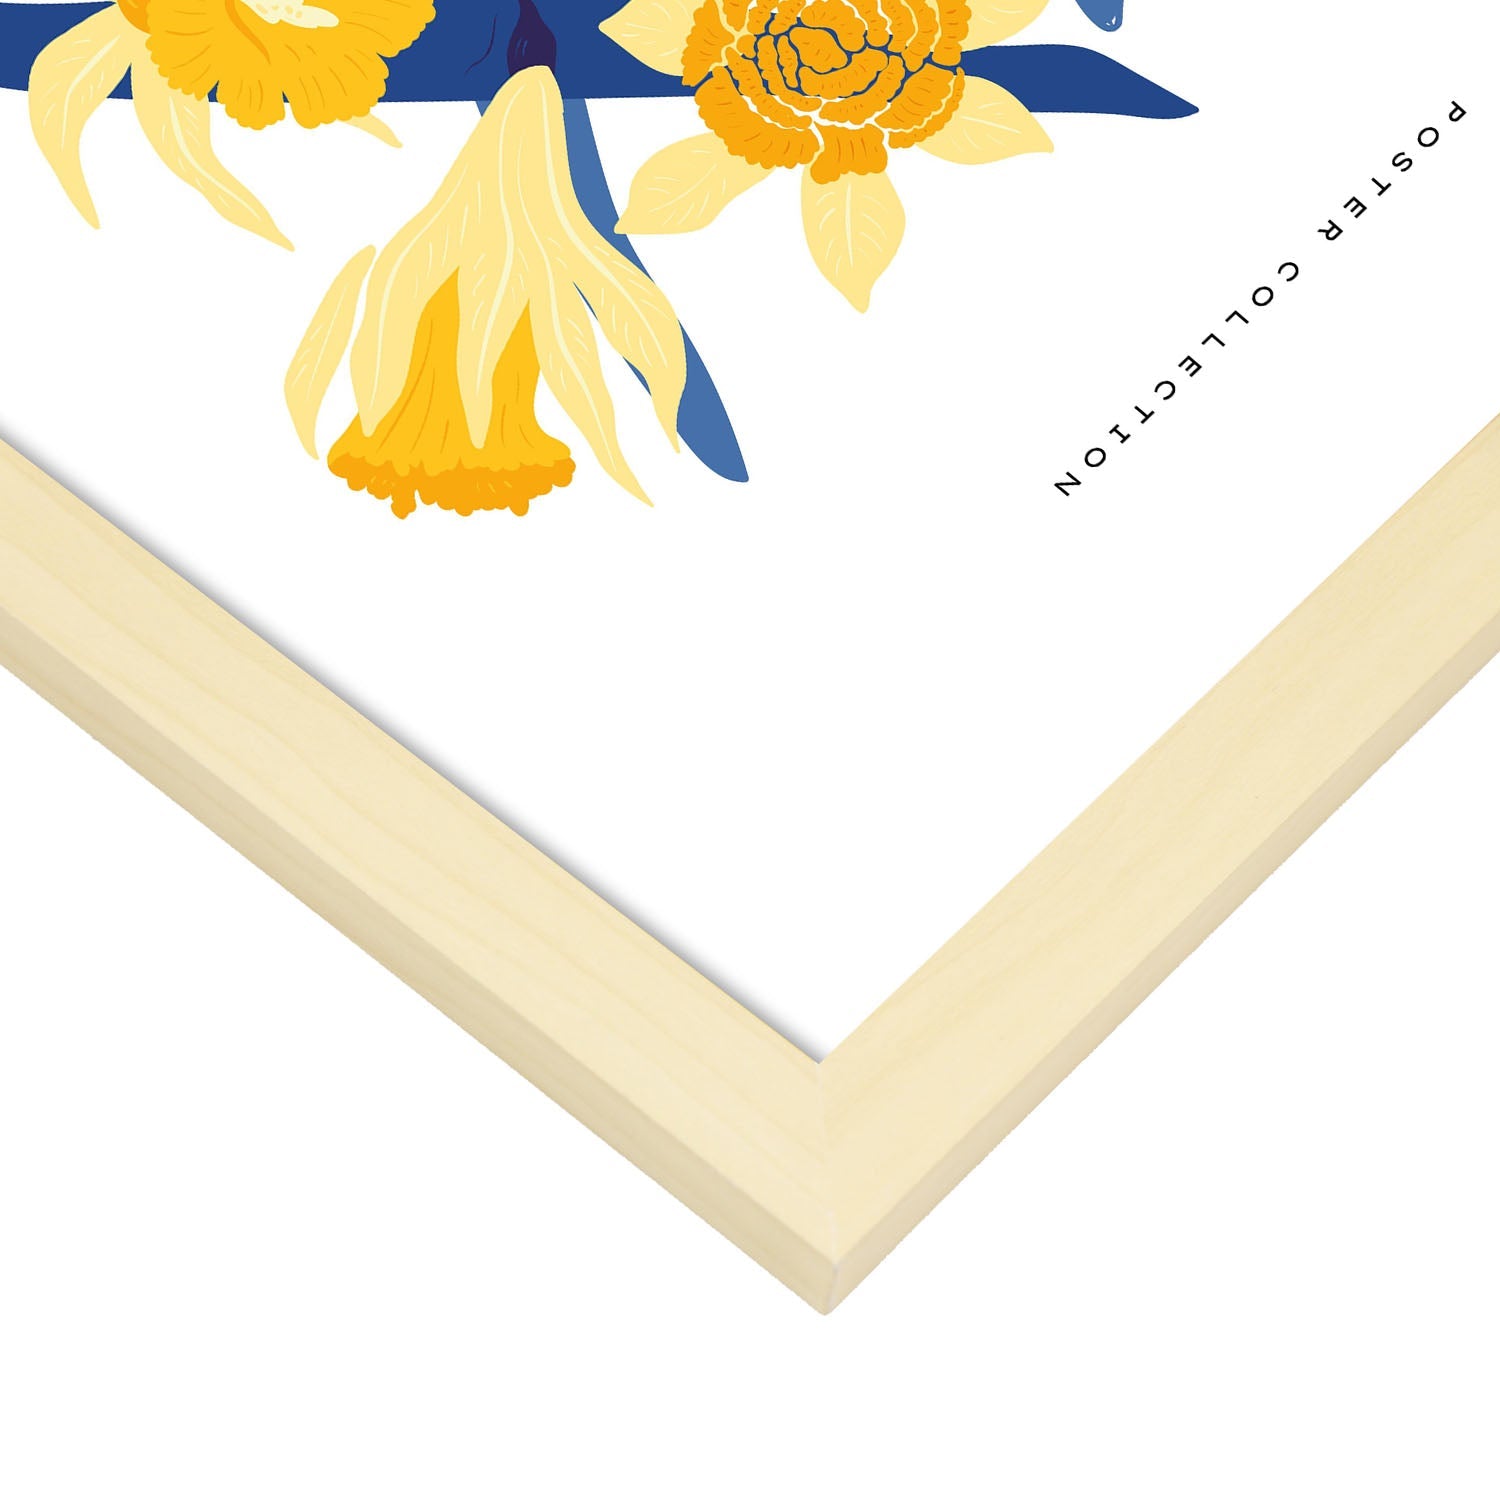 Narcissus Blossom Flower-Artwork-Nacnic-Nacnic Estudio SL